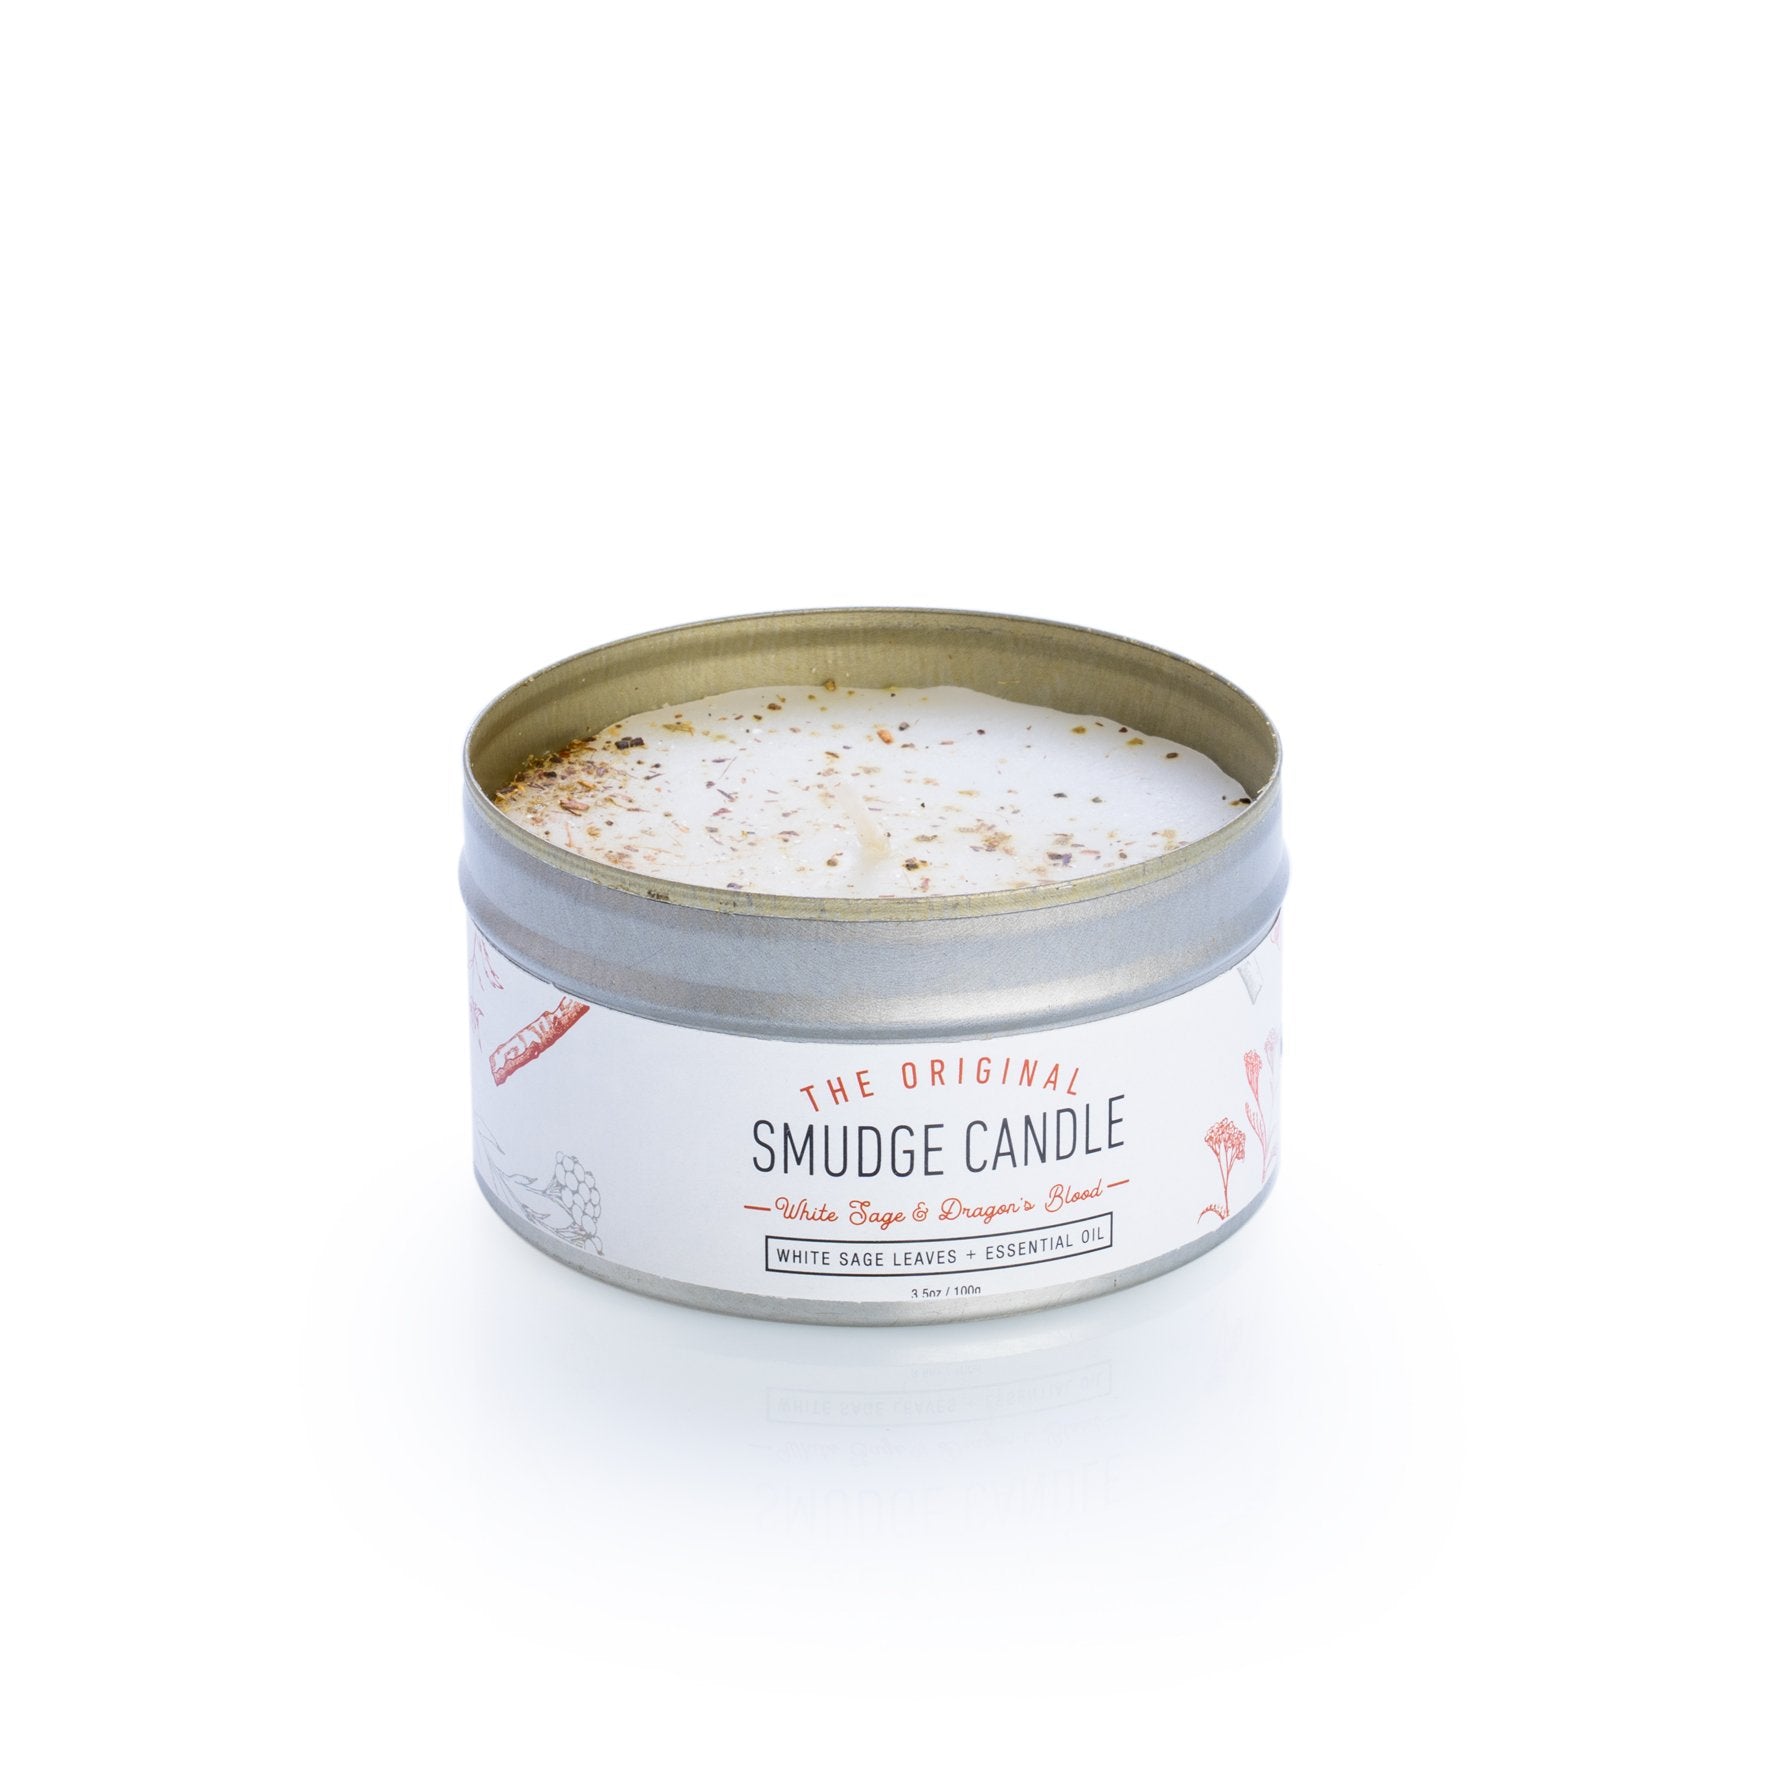 Smudge candle - white sage & dragons blood - Rivendell Shop